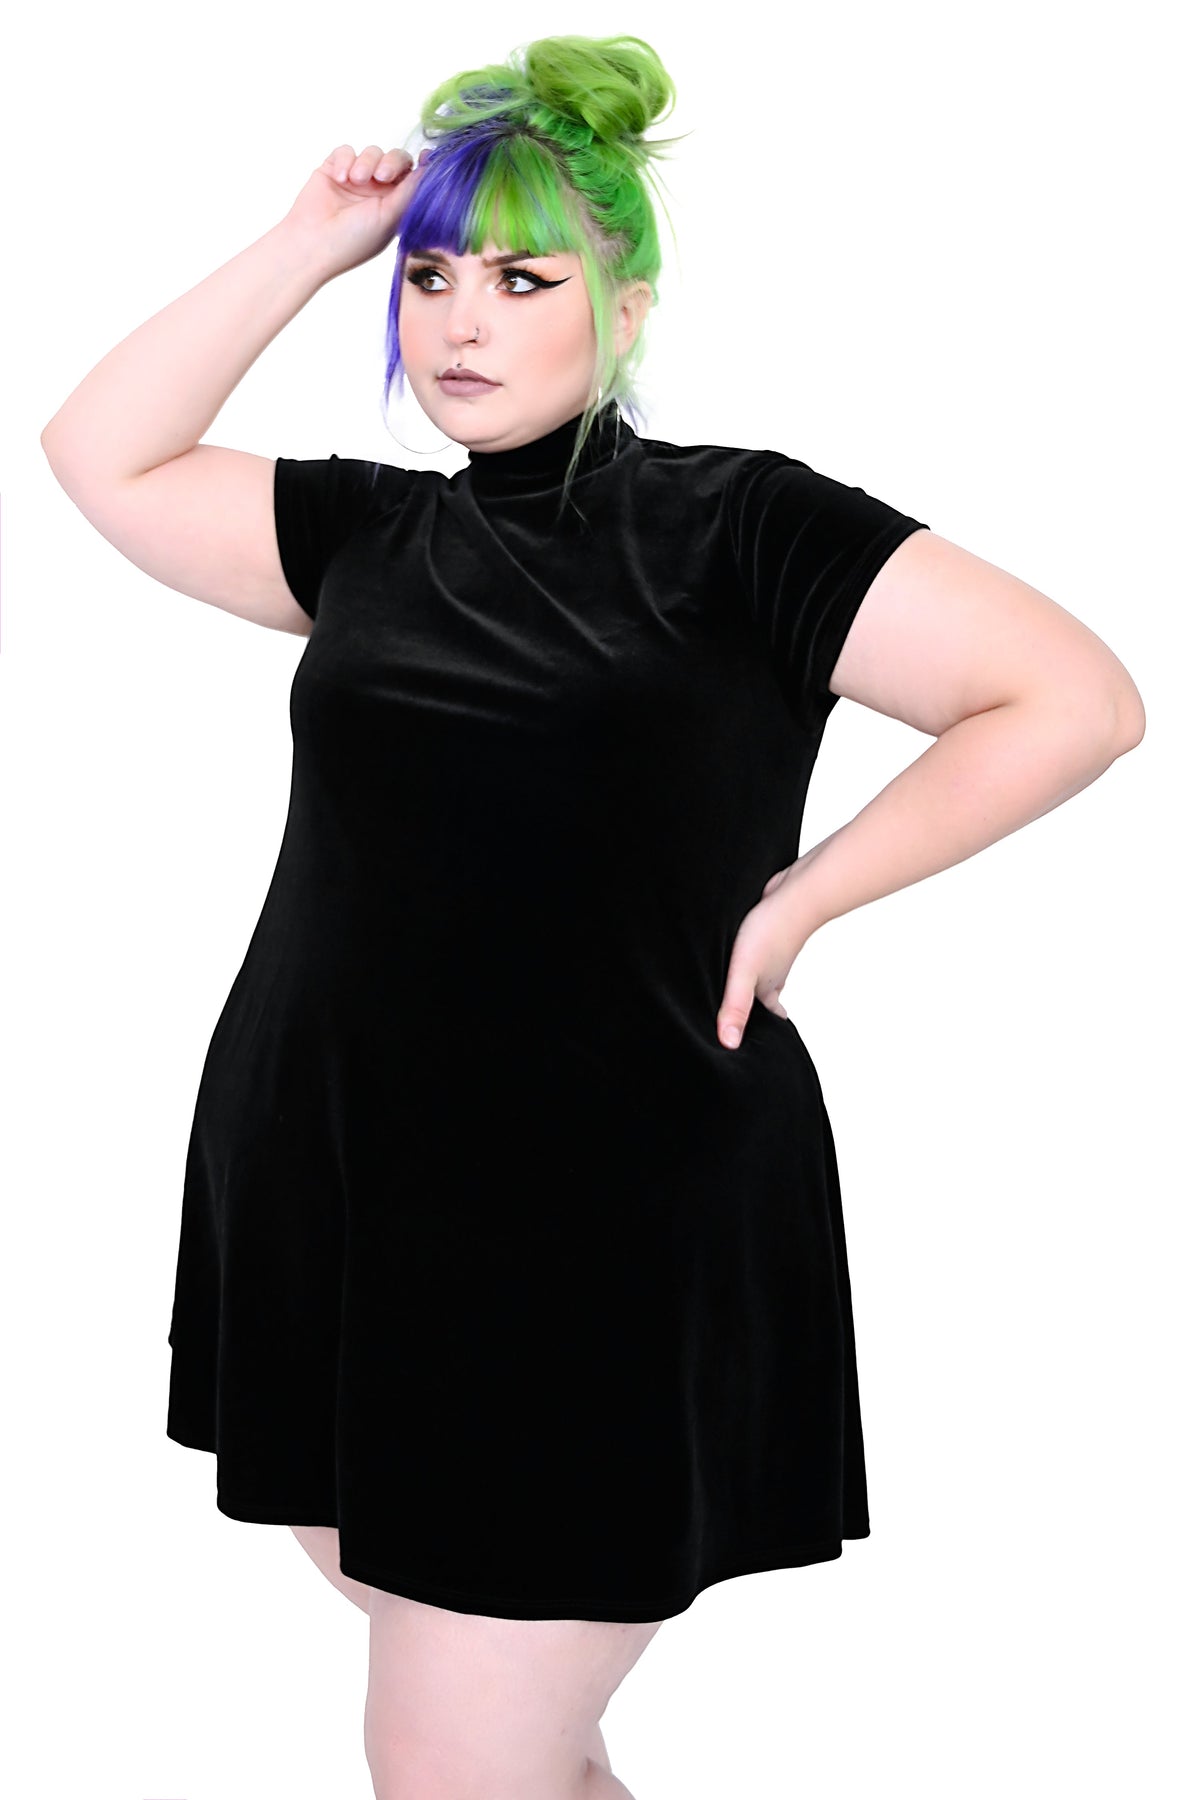 Velvet Mod Mini Dress - Small left, No Restock - Final Sale